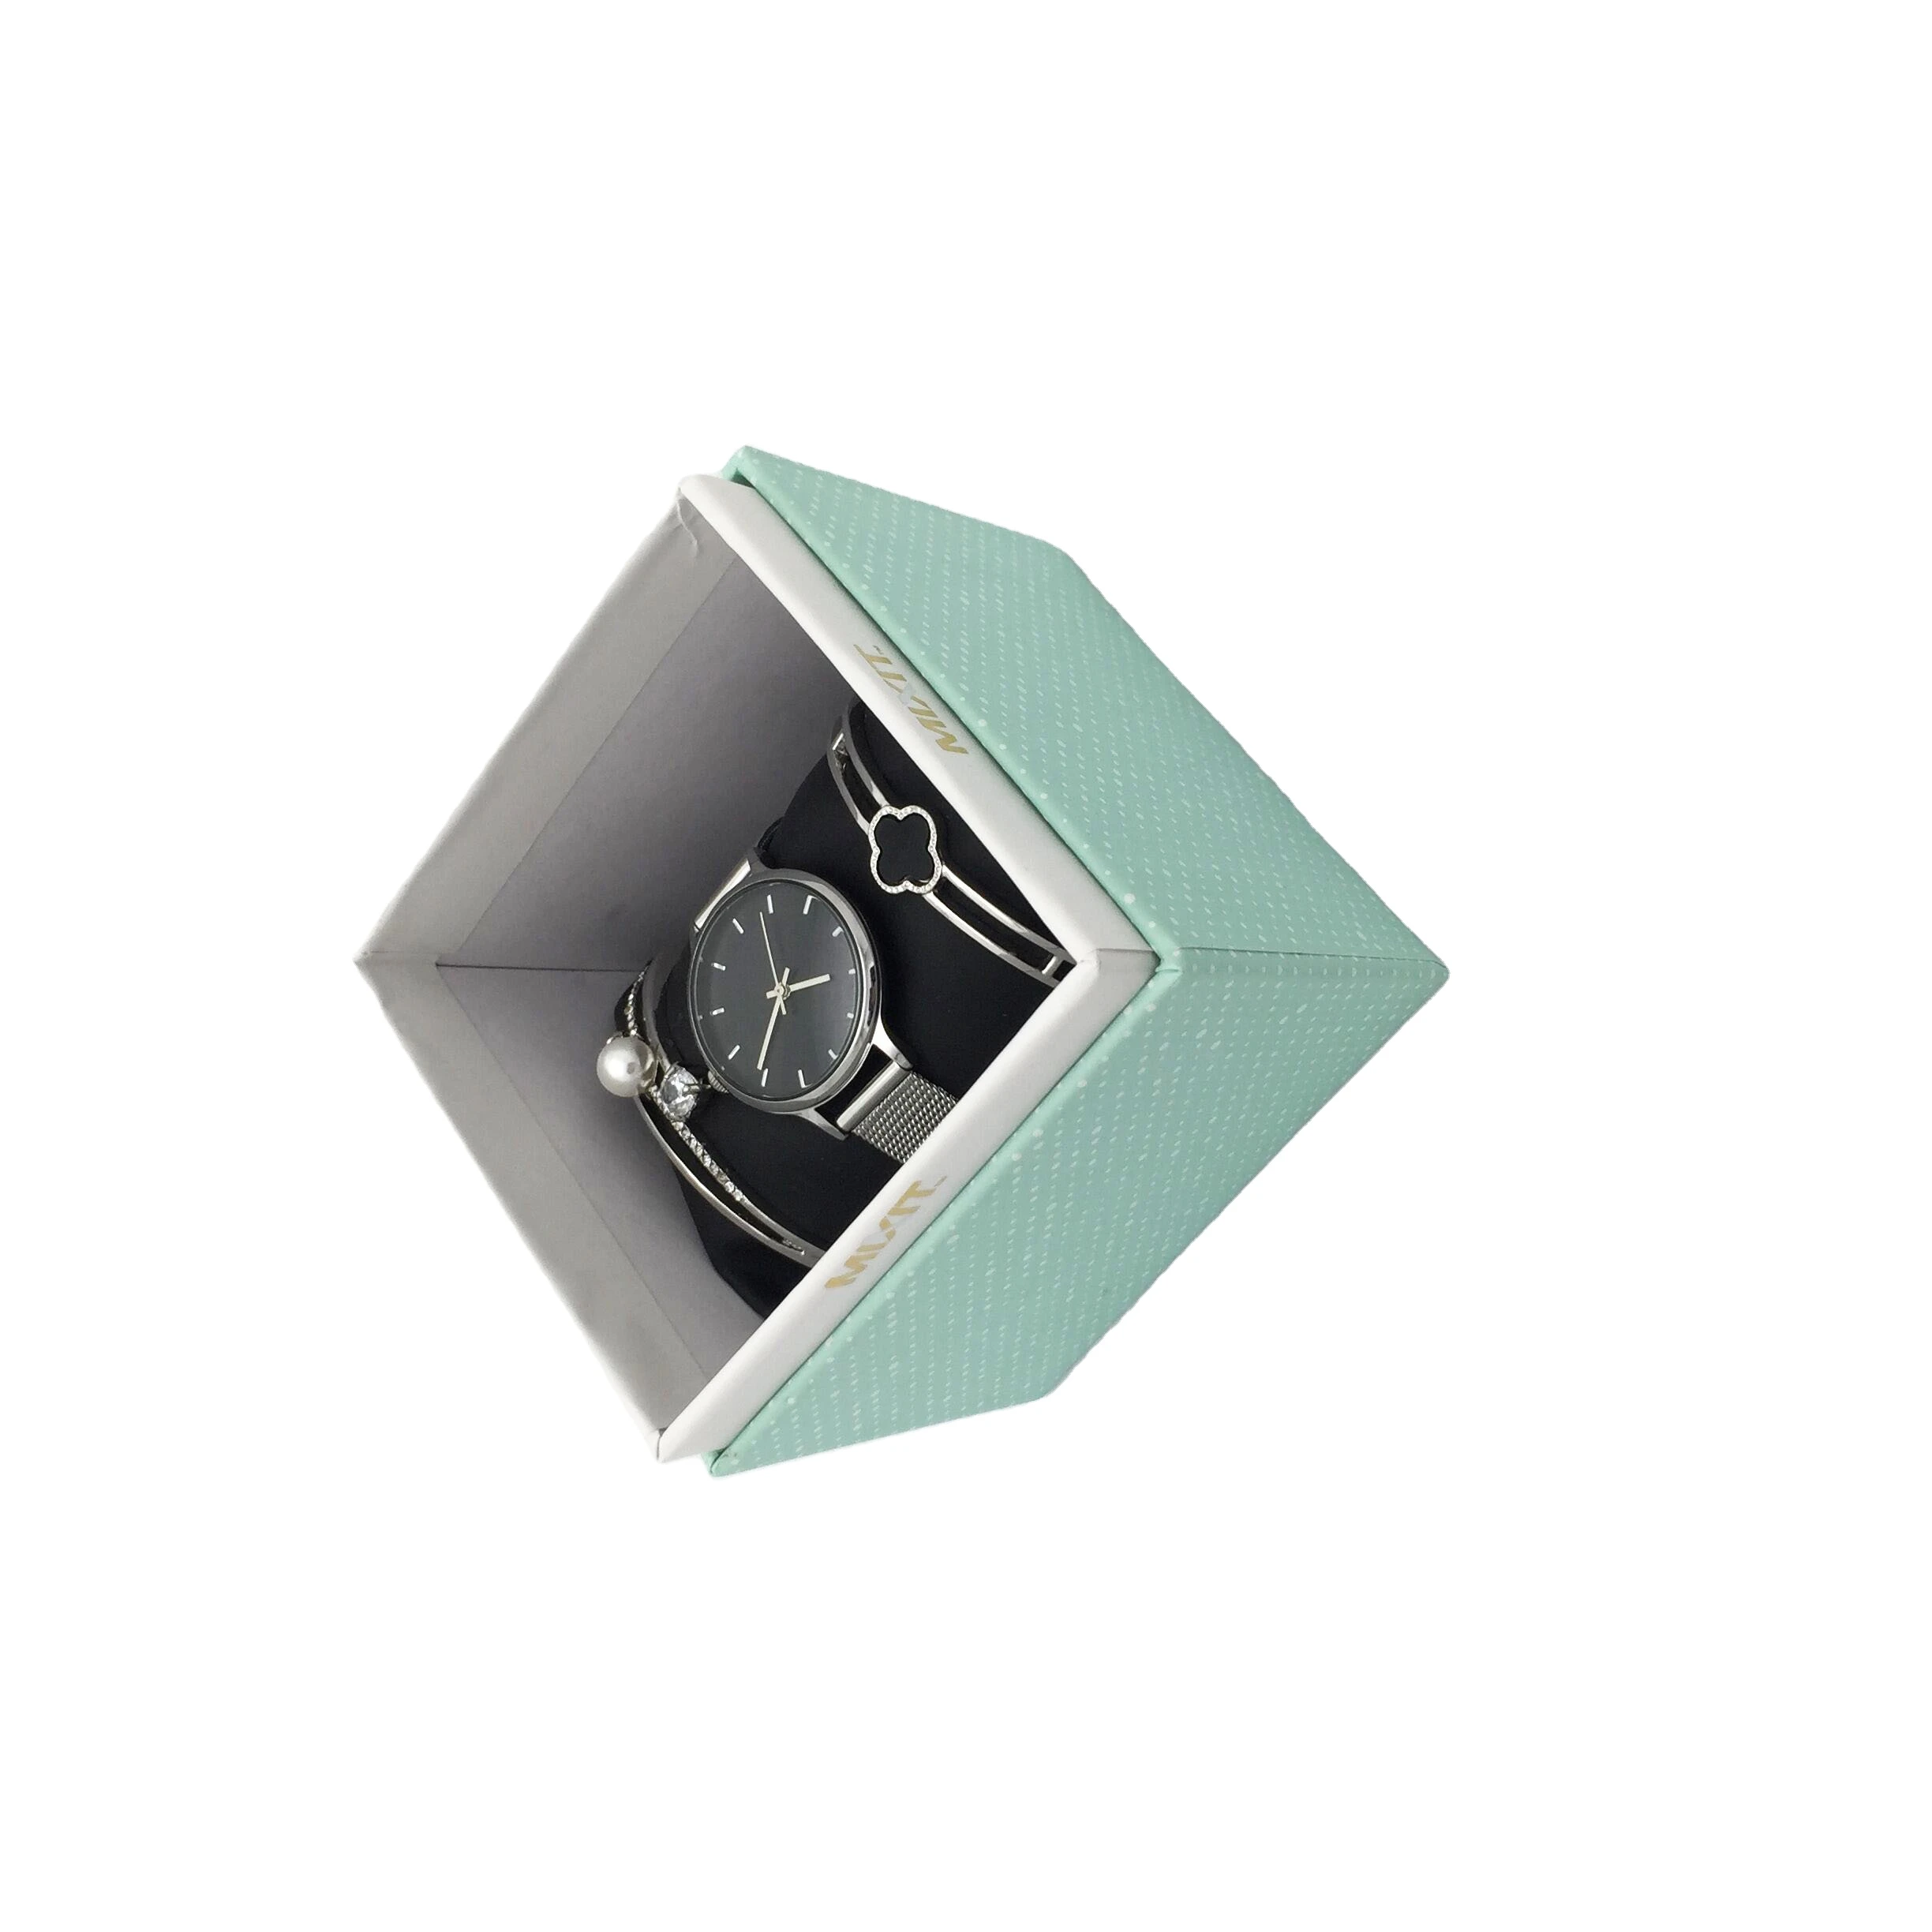 RM-H10 Hot sale Women Silver Wrist Jewelry bracelet watches Gift Sets Lady wholesale cheap quartz Watch